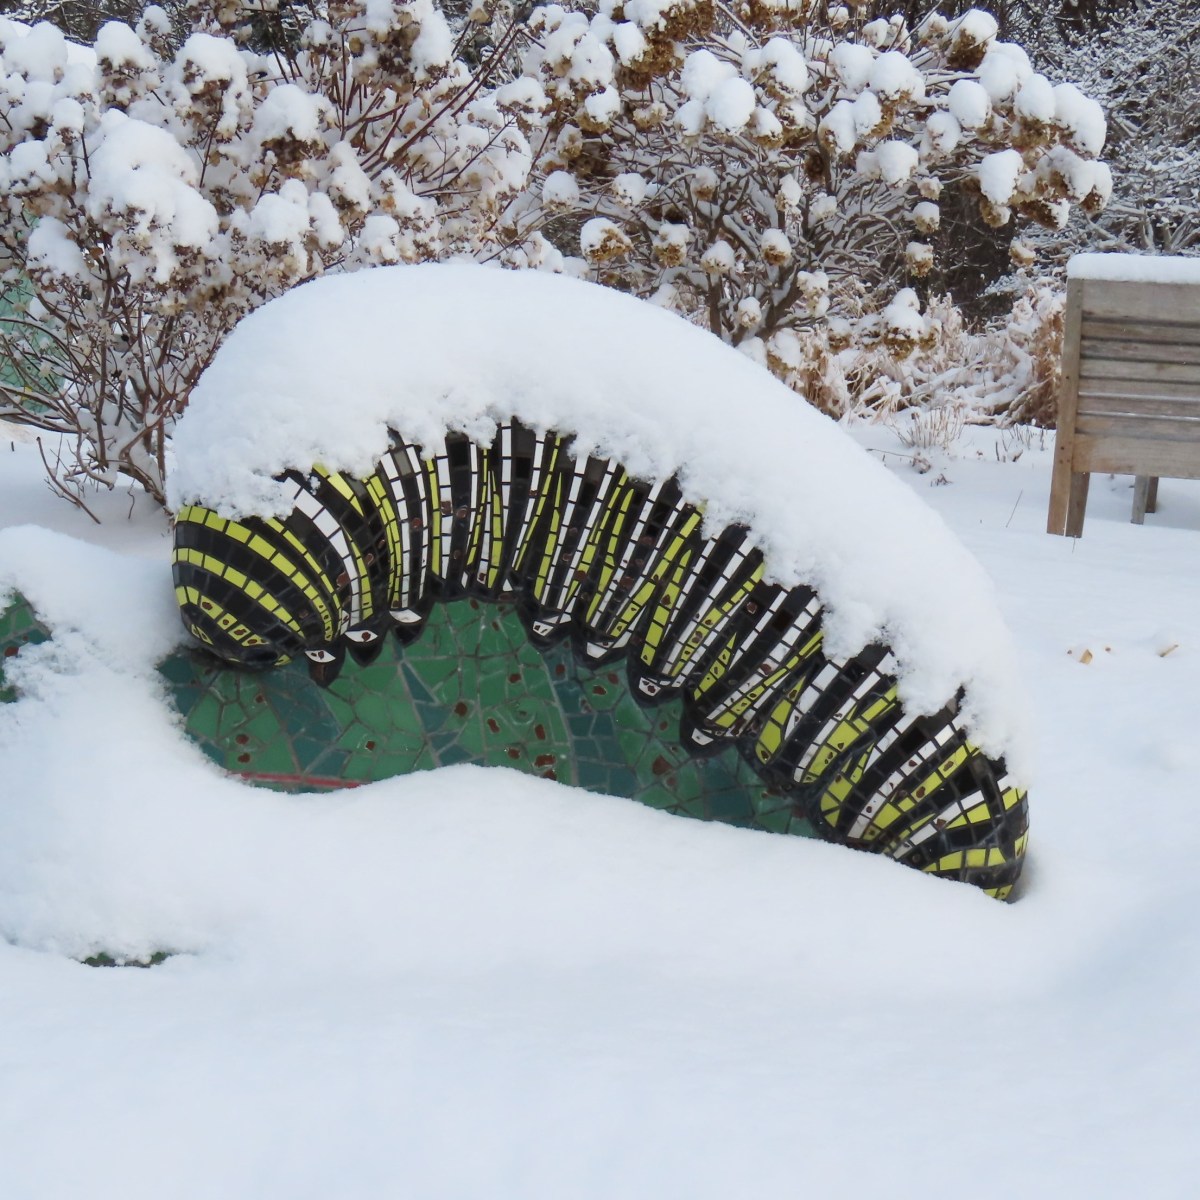 snow-covered caterpillar statue in garden